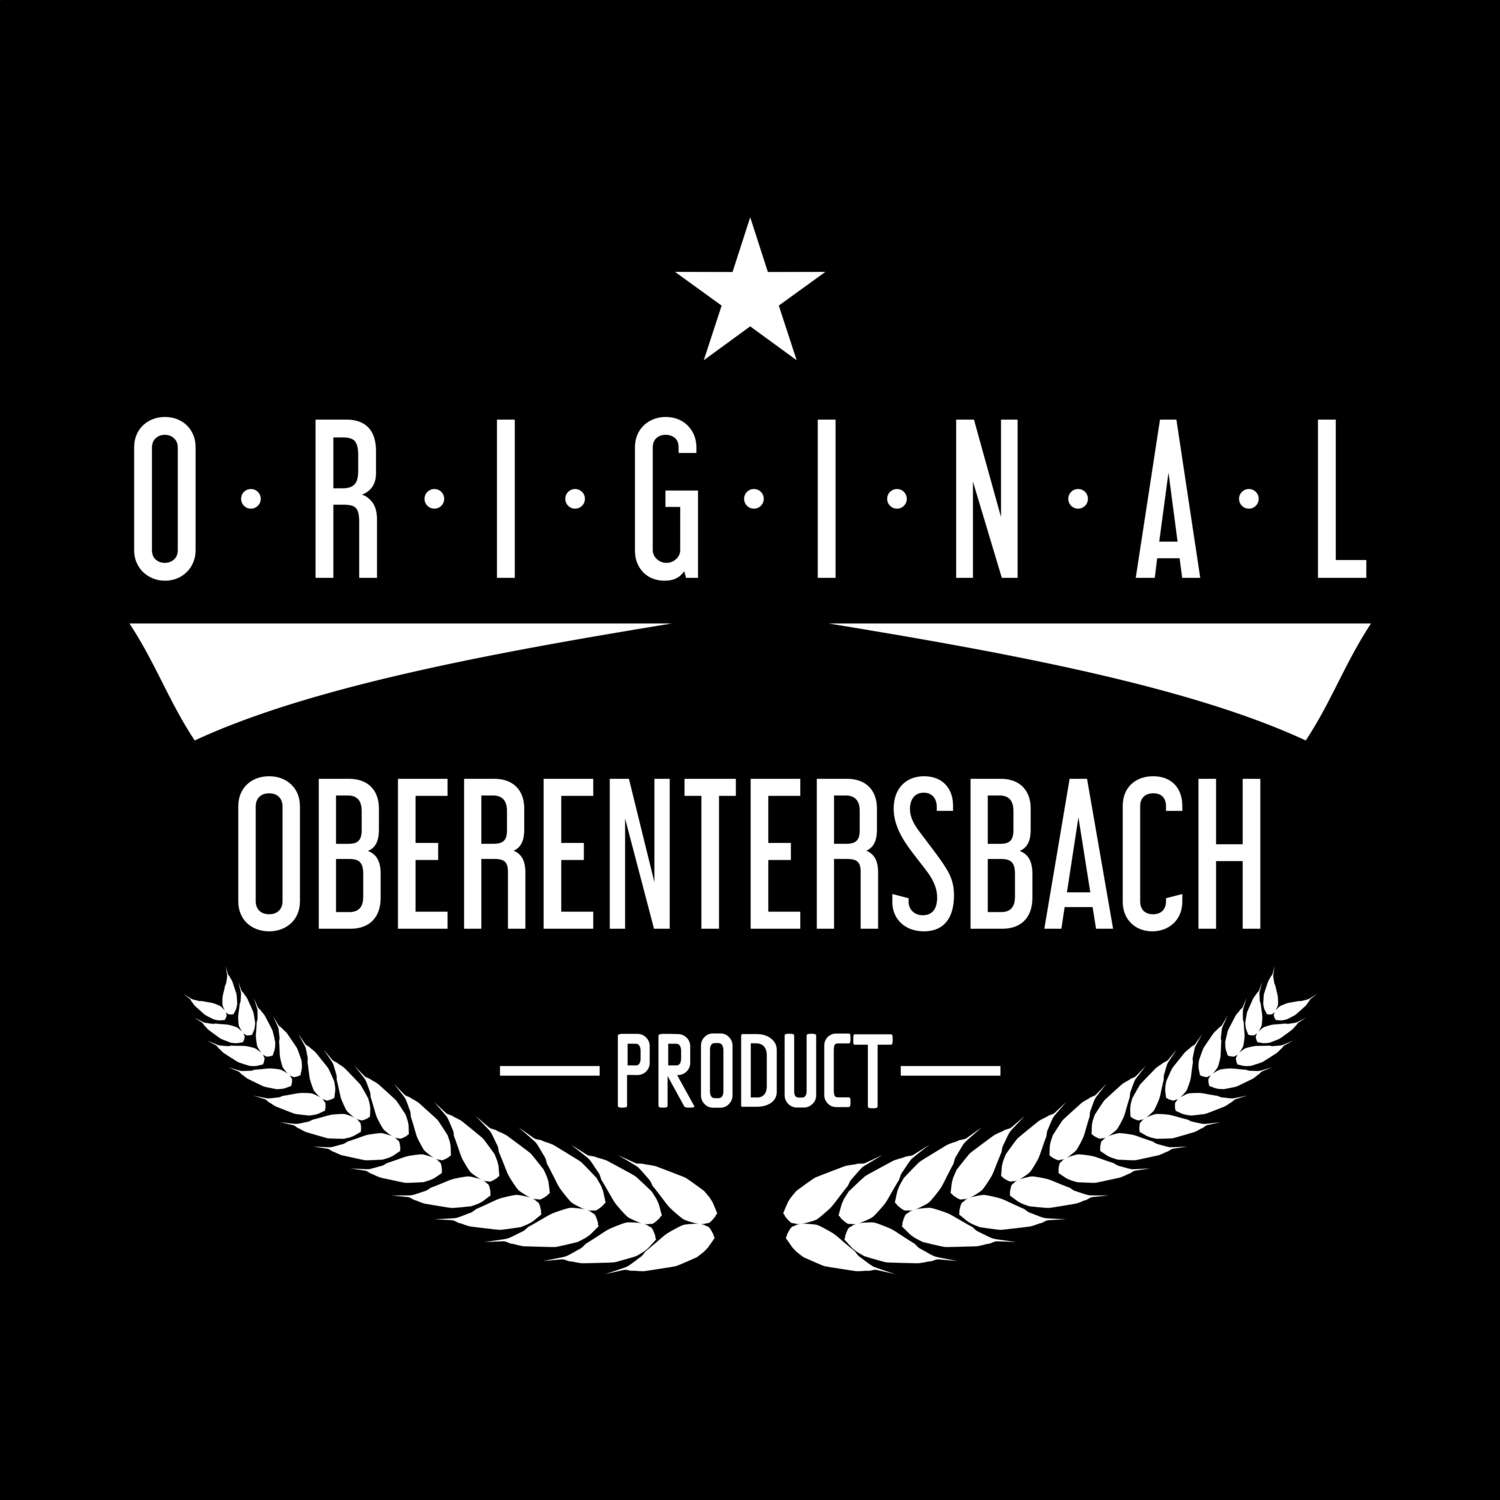 Oberentersbach T-Shirt »Original Product«